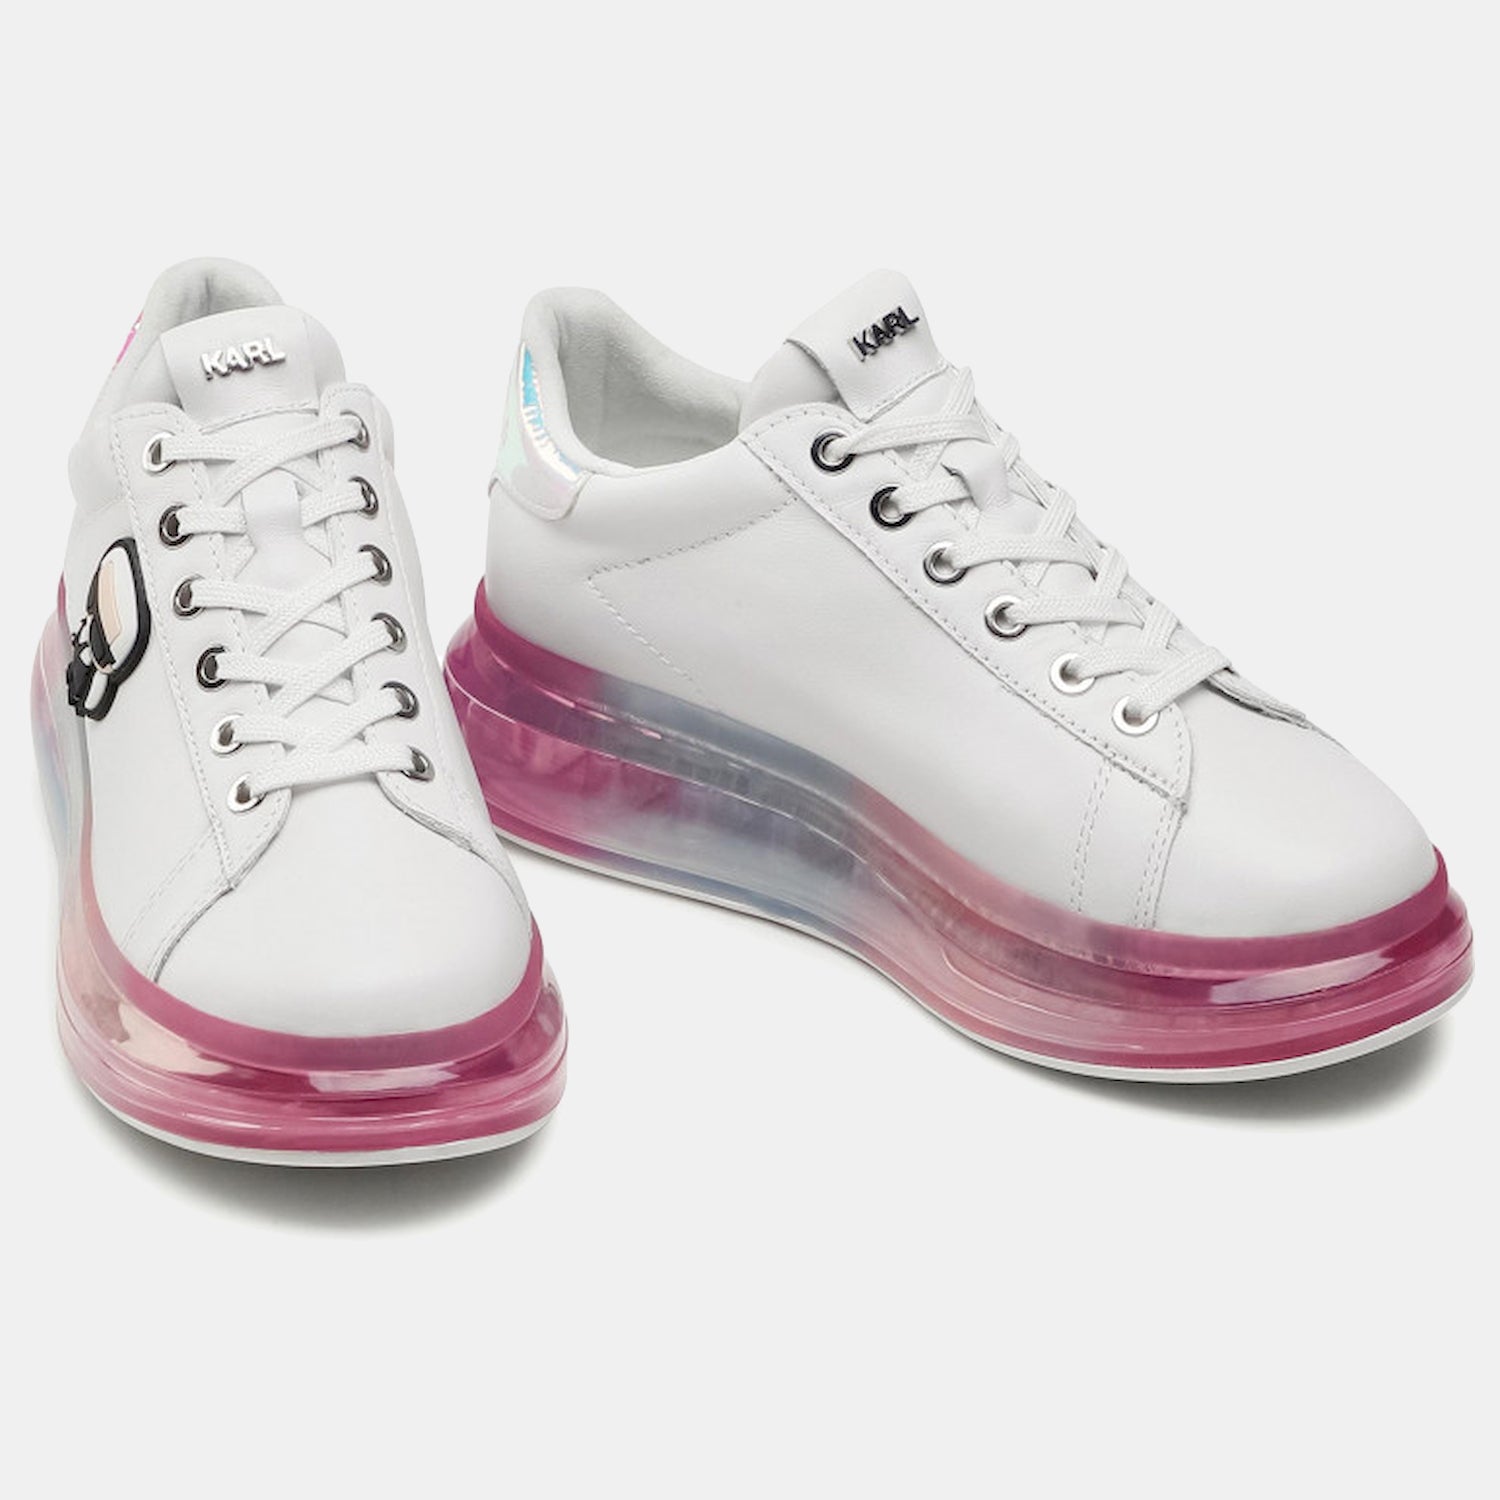 Karl Lagerfeld Sapatilhas Sneakers Shoes Kl62689 Whi Pink Branco Rosa_shot5